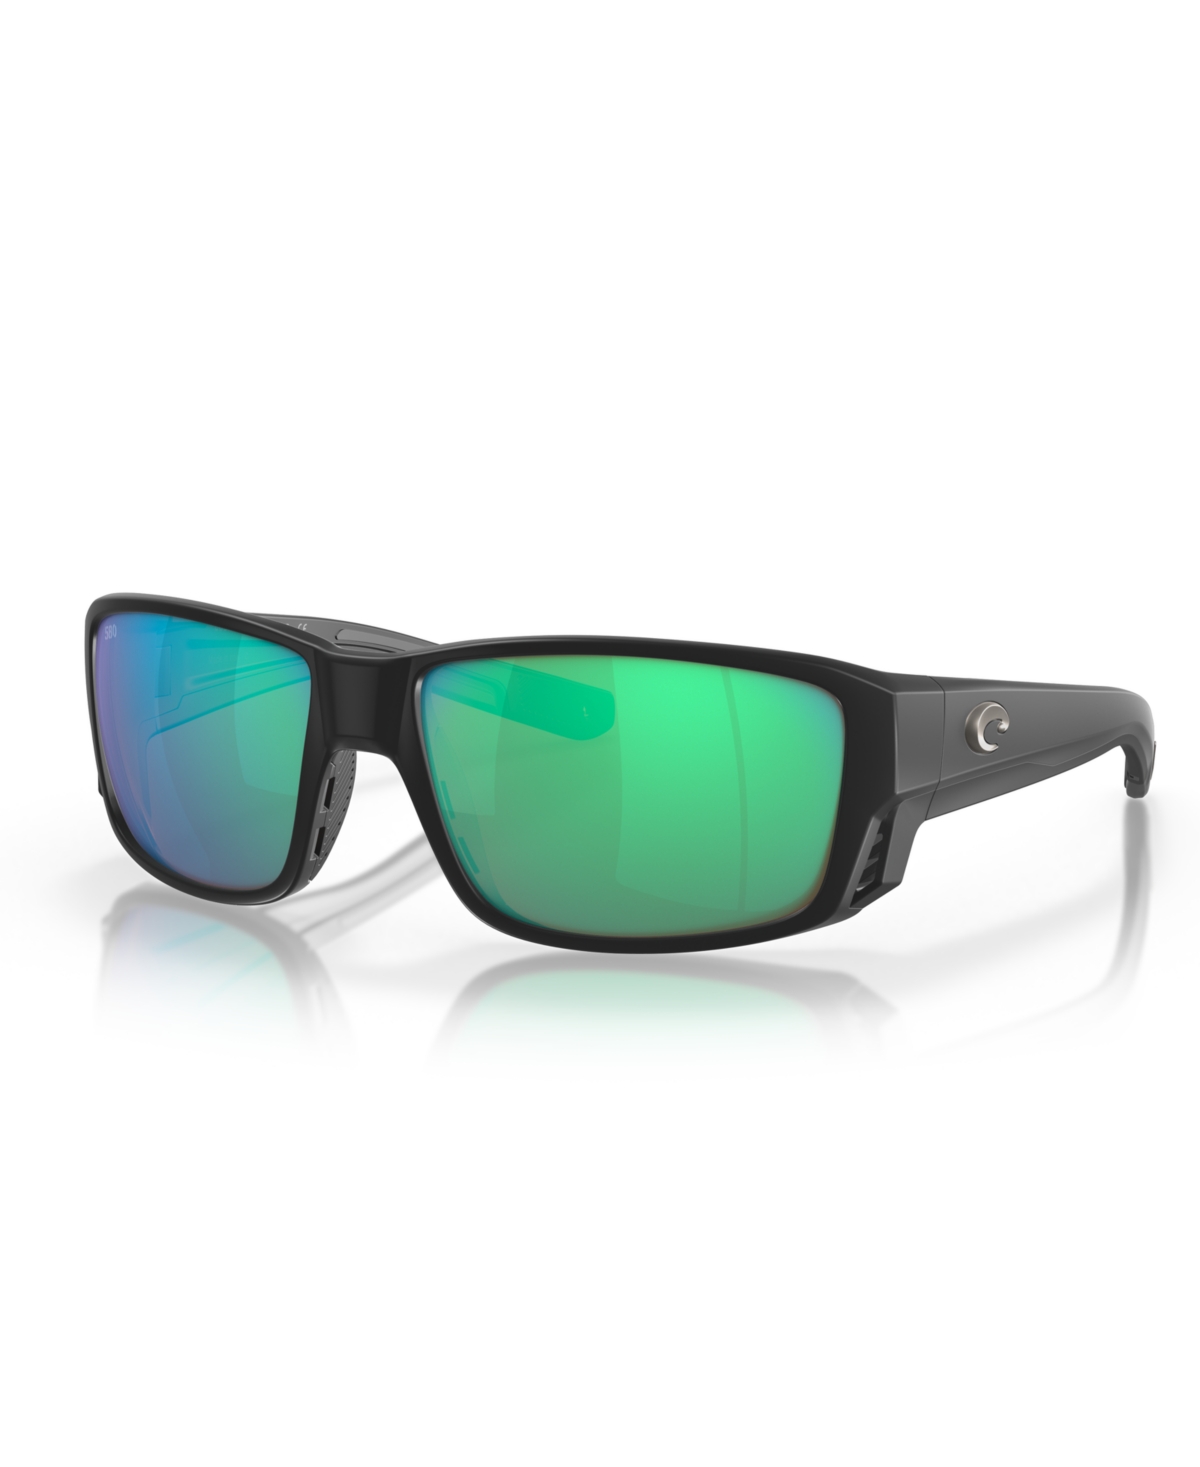 Men's Pargo Polarized Sunglasses, Mirror 6S9086 - Matte Black, Gray